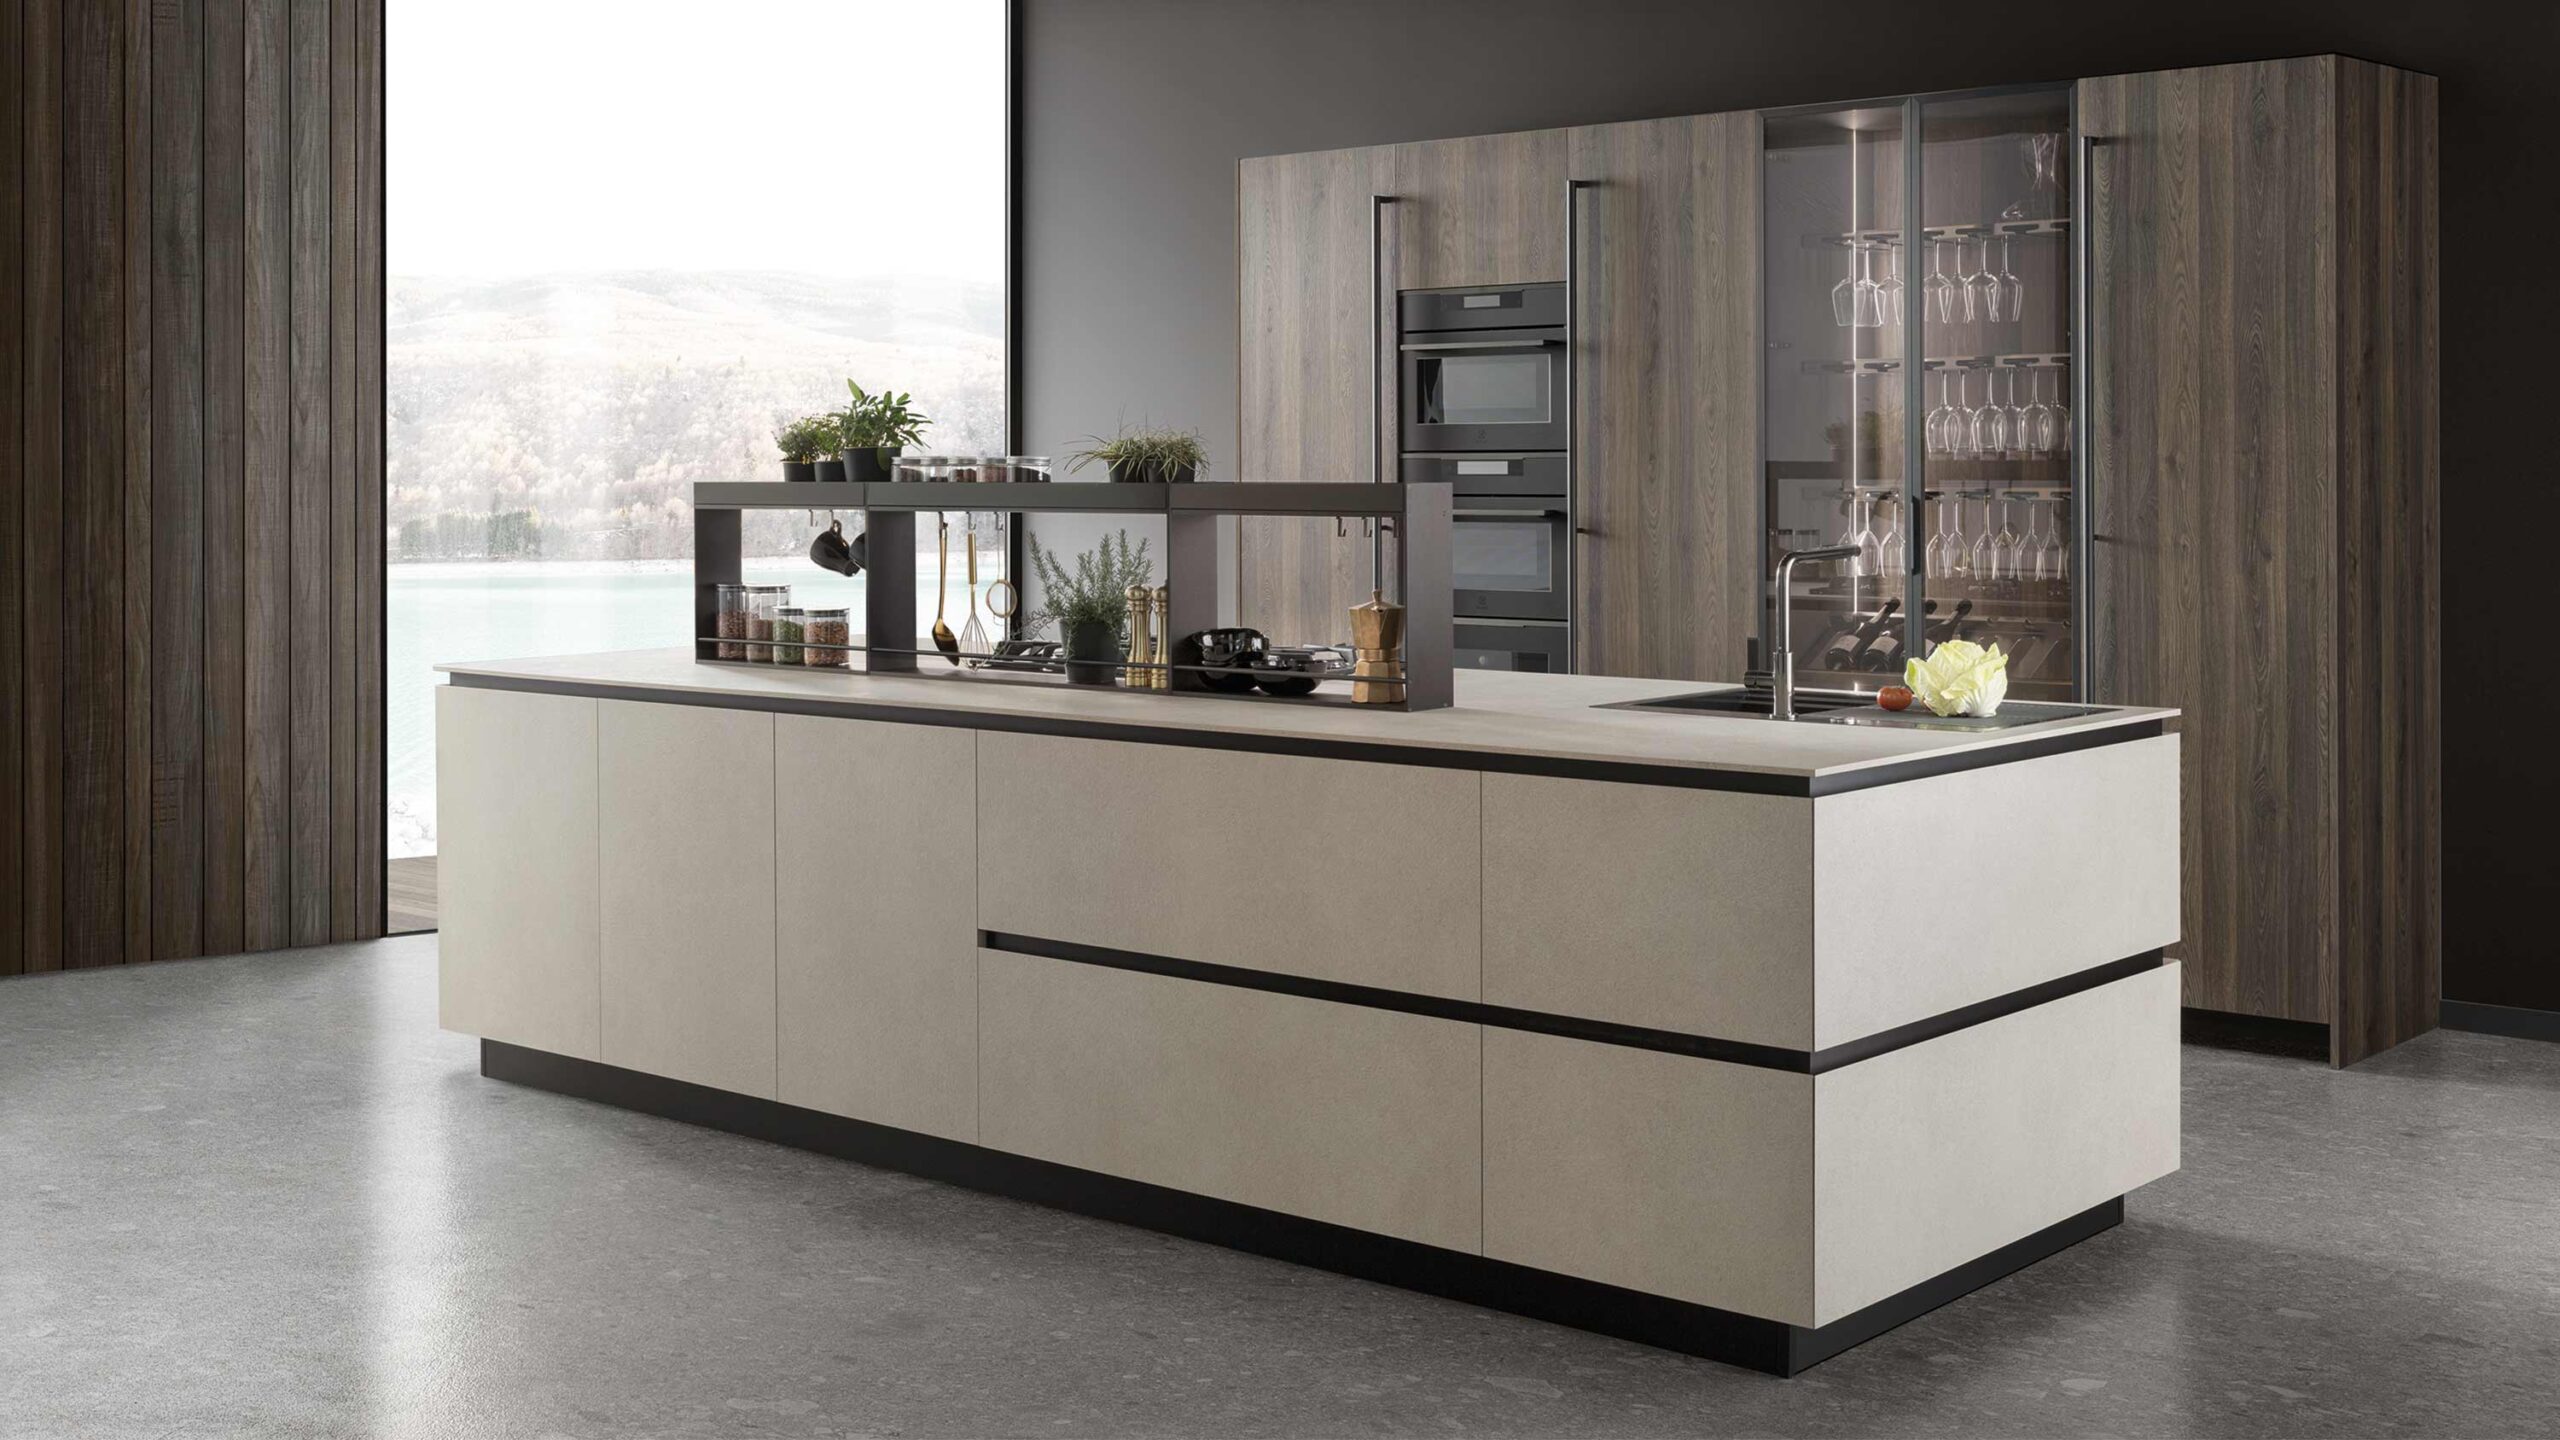 Modern kitchen island design with 30 degree mitred edge, glass tall units and oak veneer